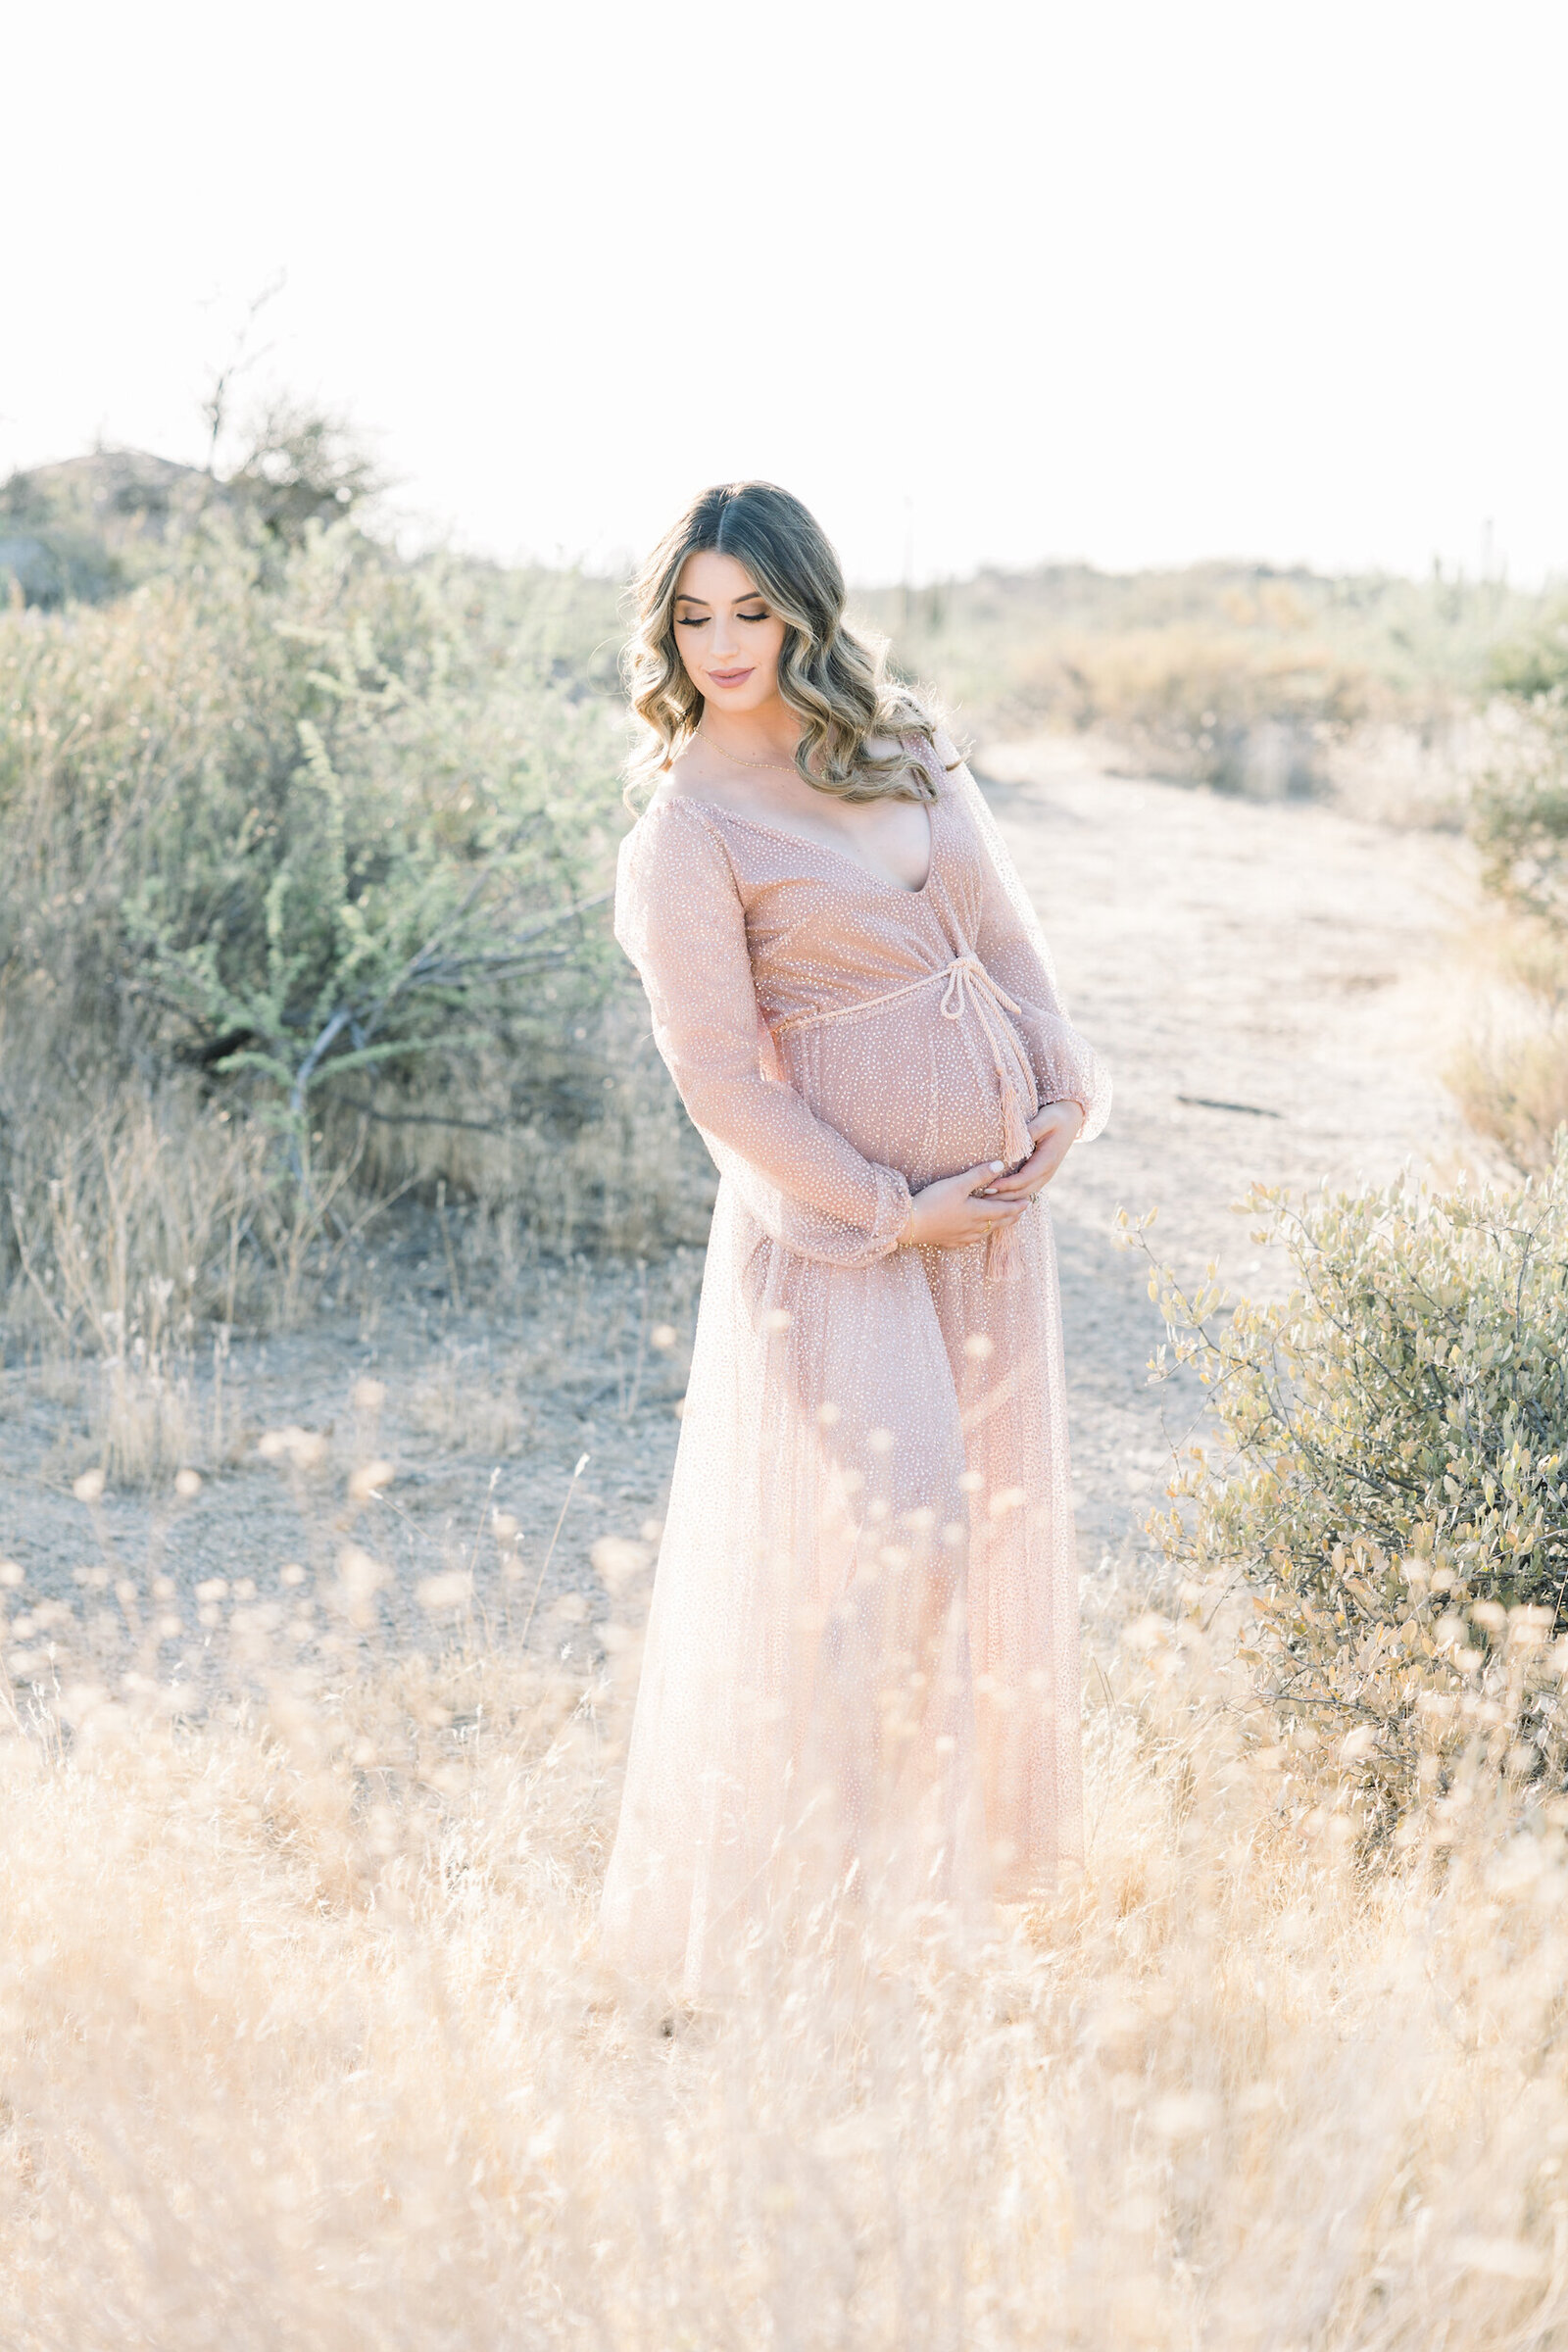 Arizona-Desert-Maternity-Photography-Brenna-Heater38